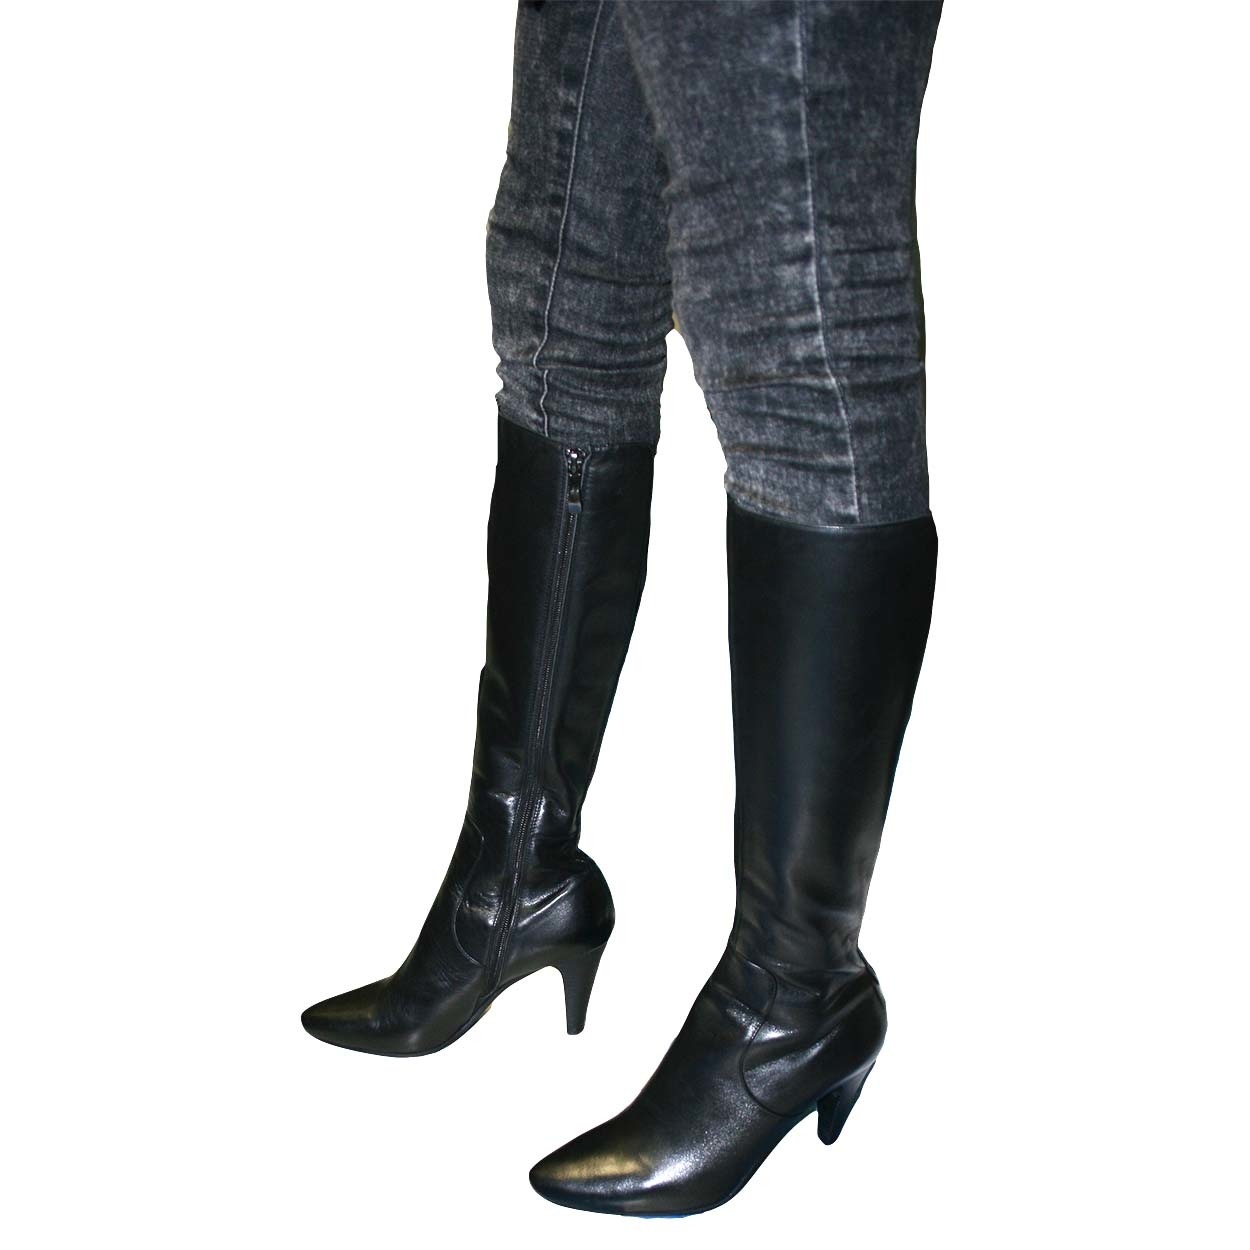 black knee high boots slim calf